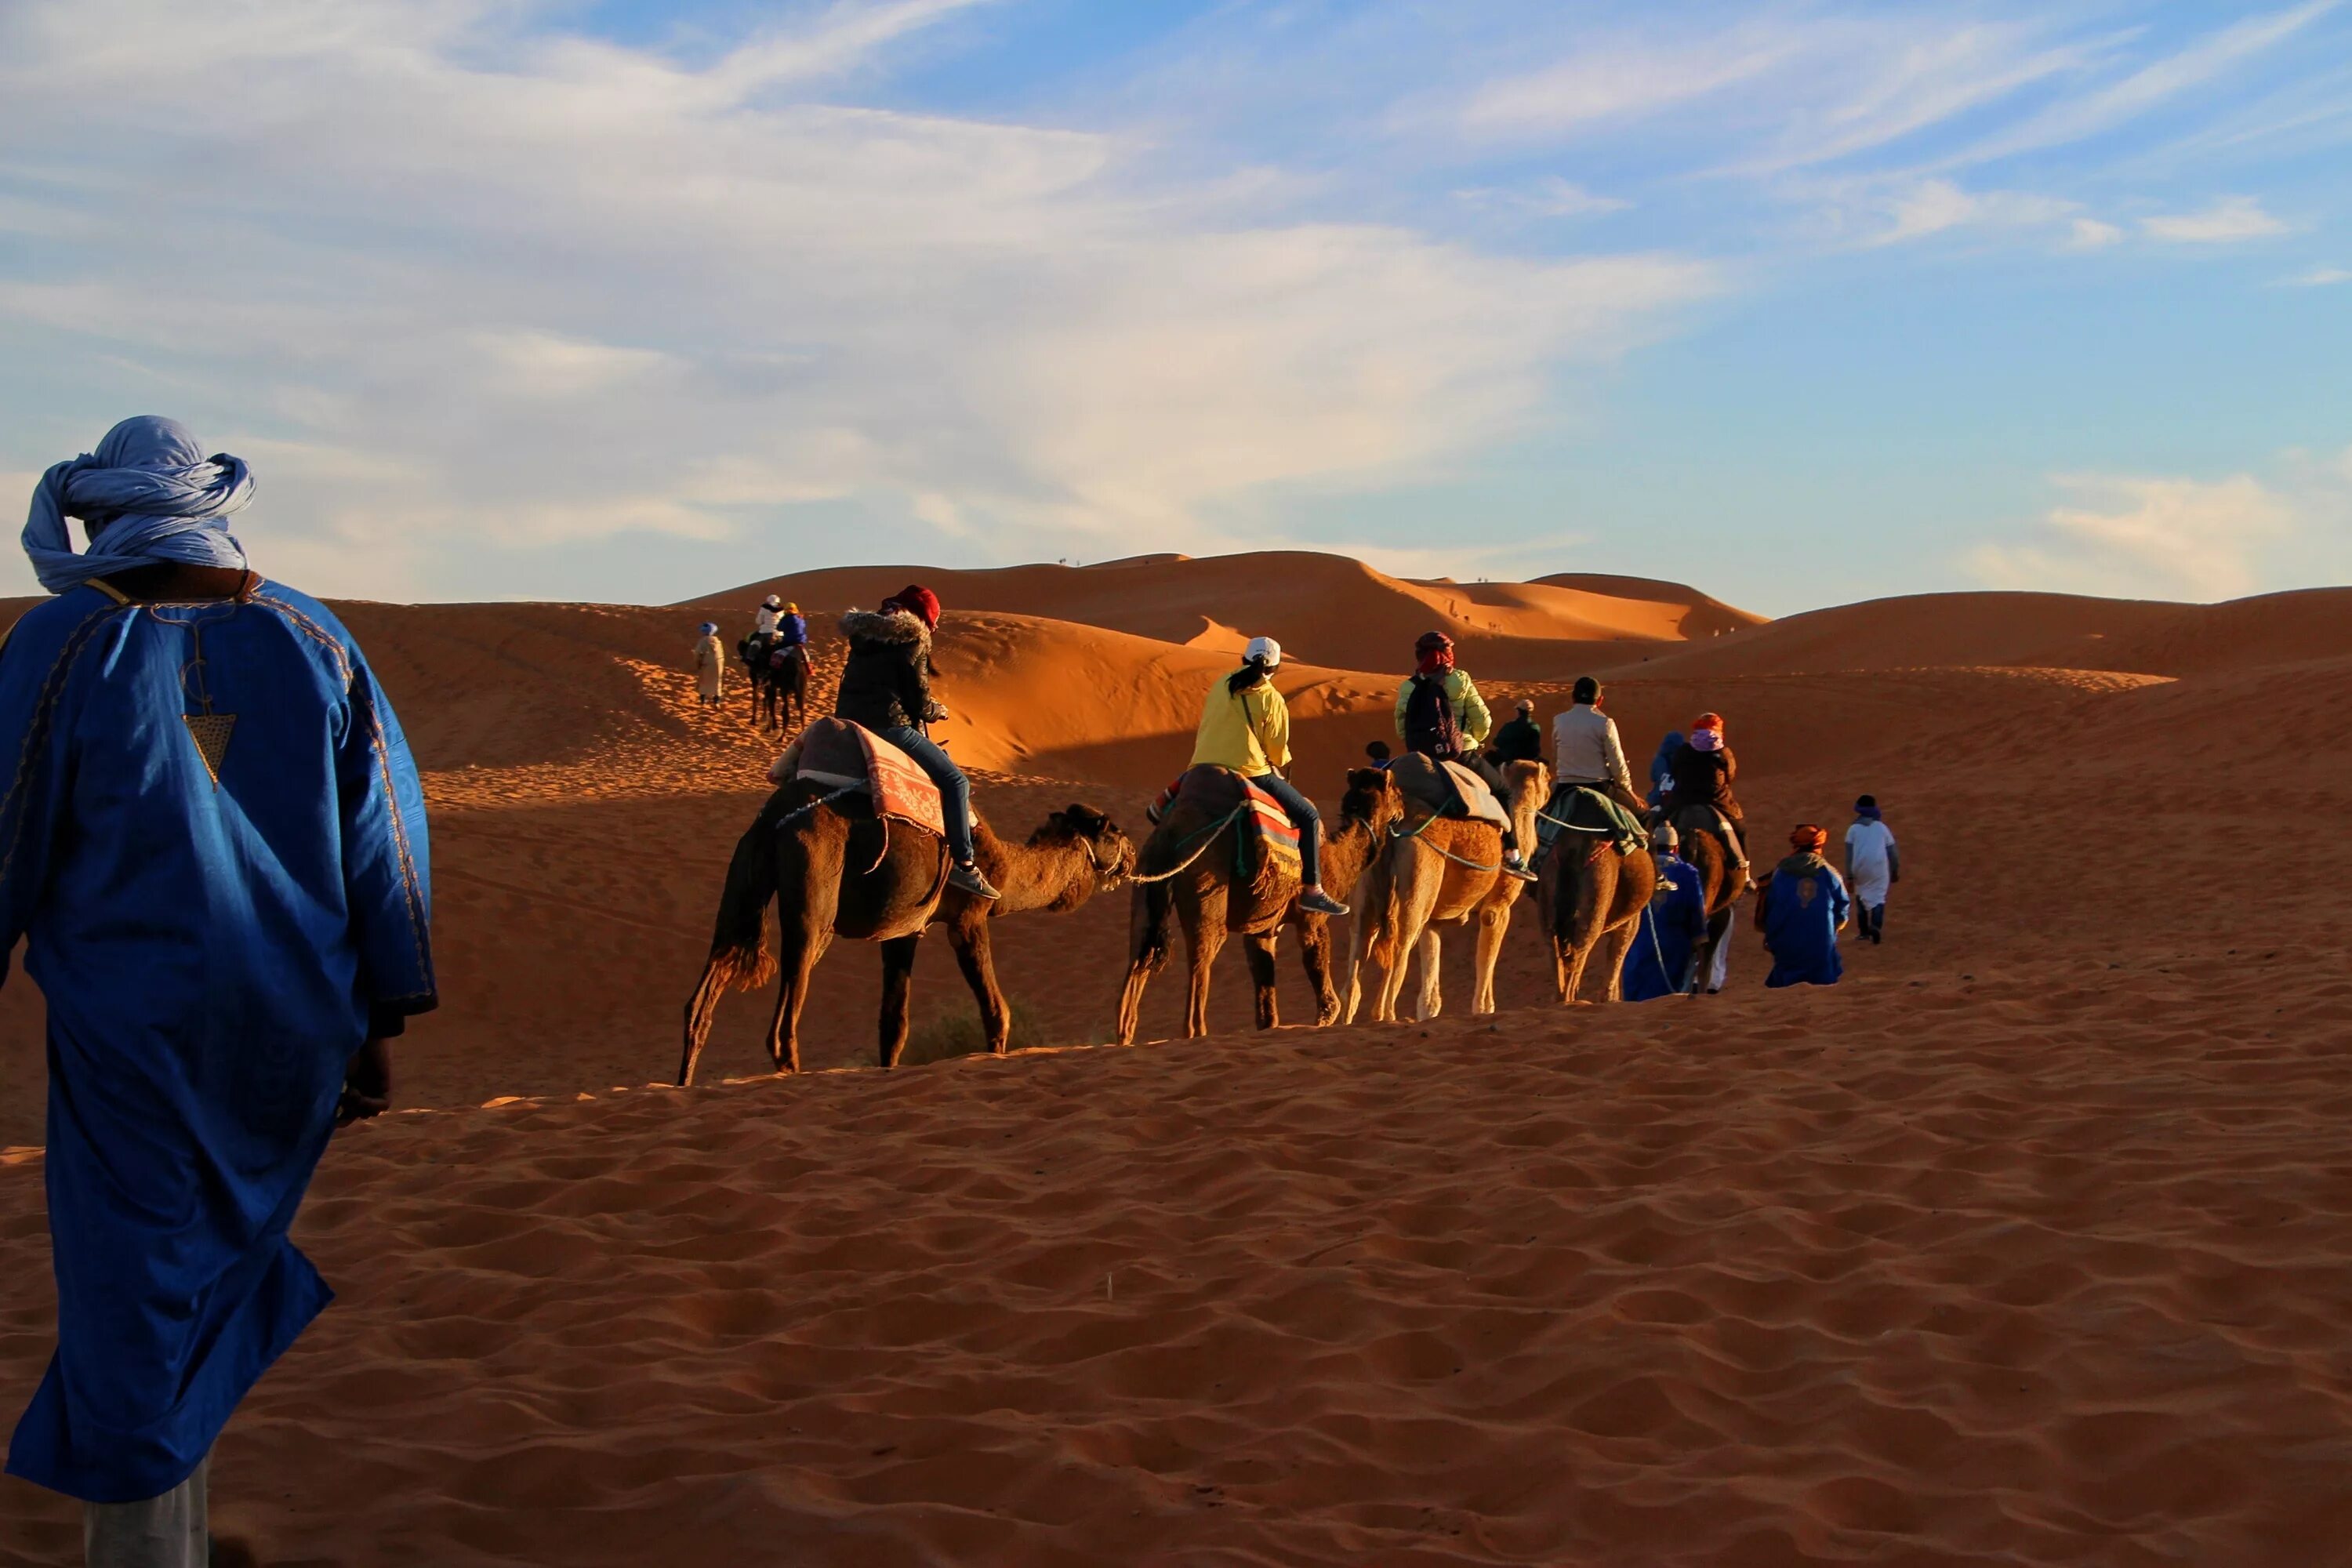 Morocco travel. Бедуины Марокко. Марокко пустыня сахара на верблюдах. Марокко пустыня Караваны. Марокко Караван.